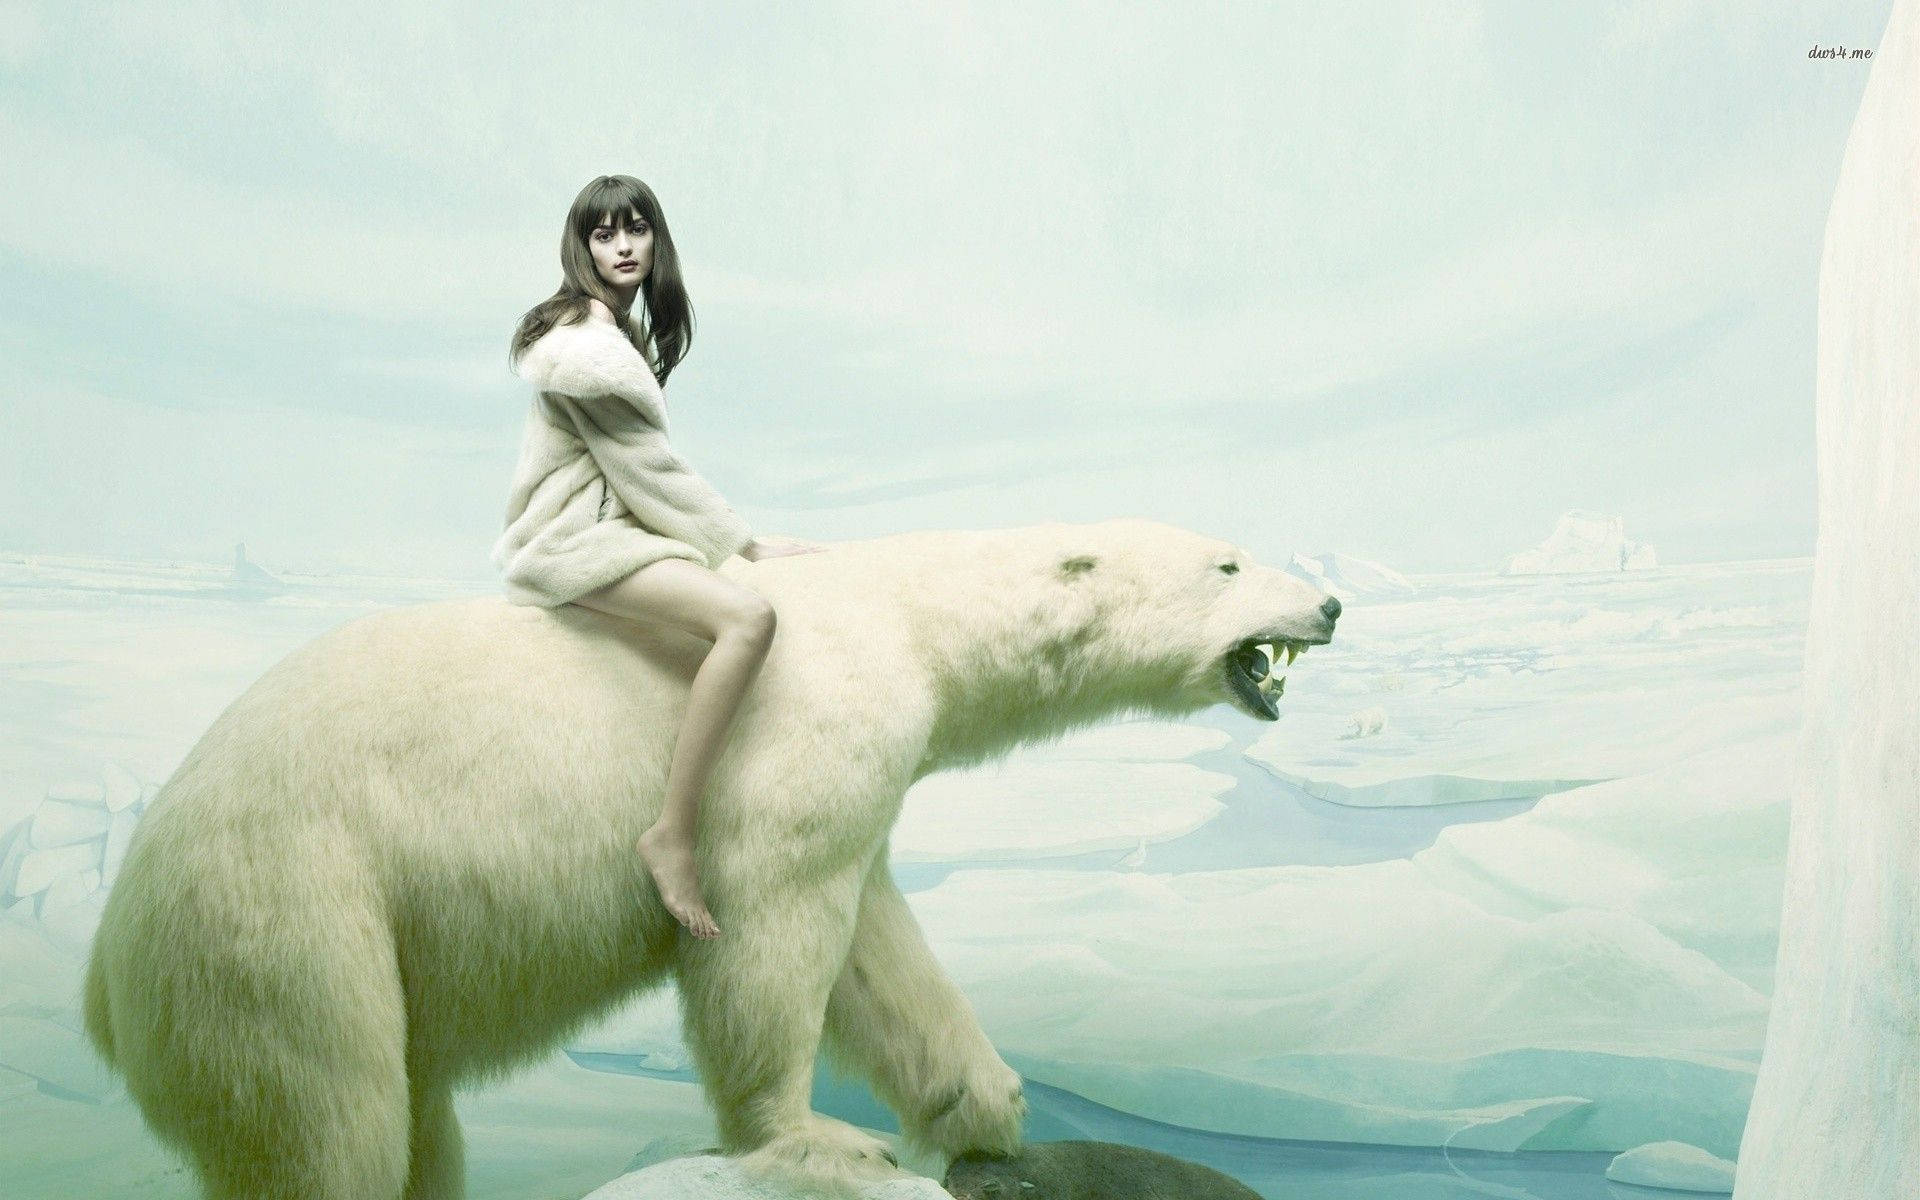 Woman Riding Polar Bear Wallpaper